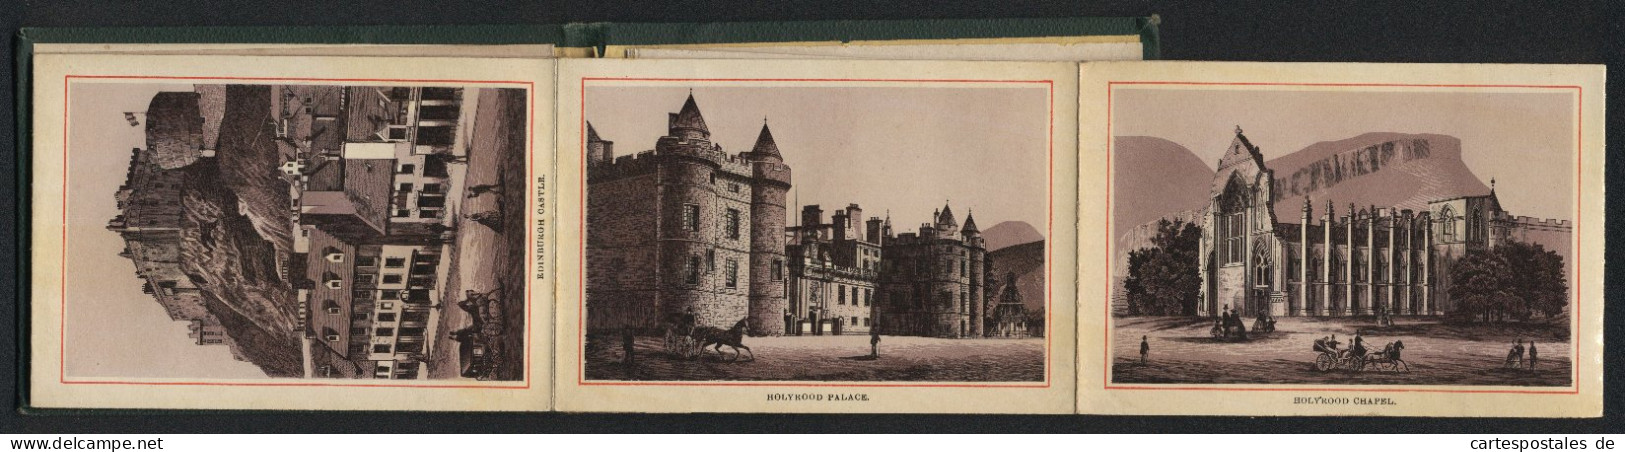 Leporello-Album Edinburgh Mit 12 Lithographie-Ansichten, Princes Street, Old Town, Scott Monument, John Knox House  - Lithographies